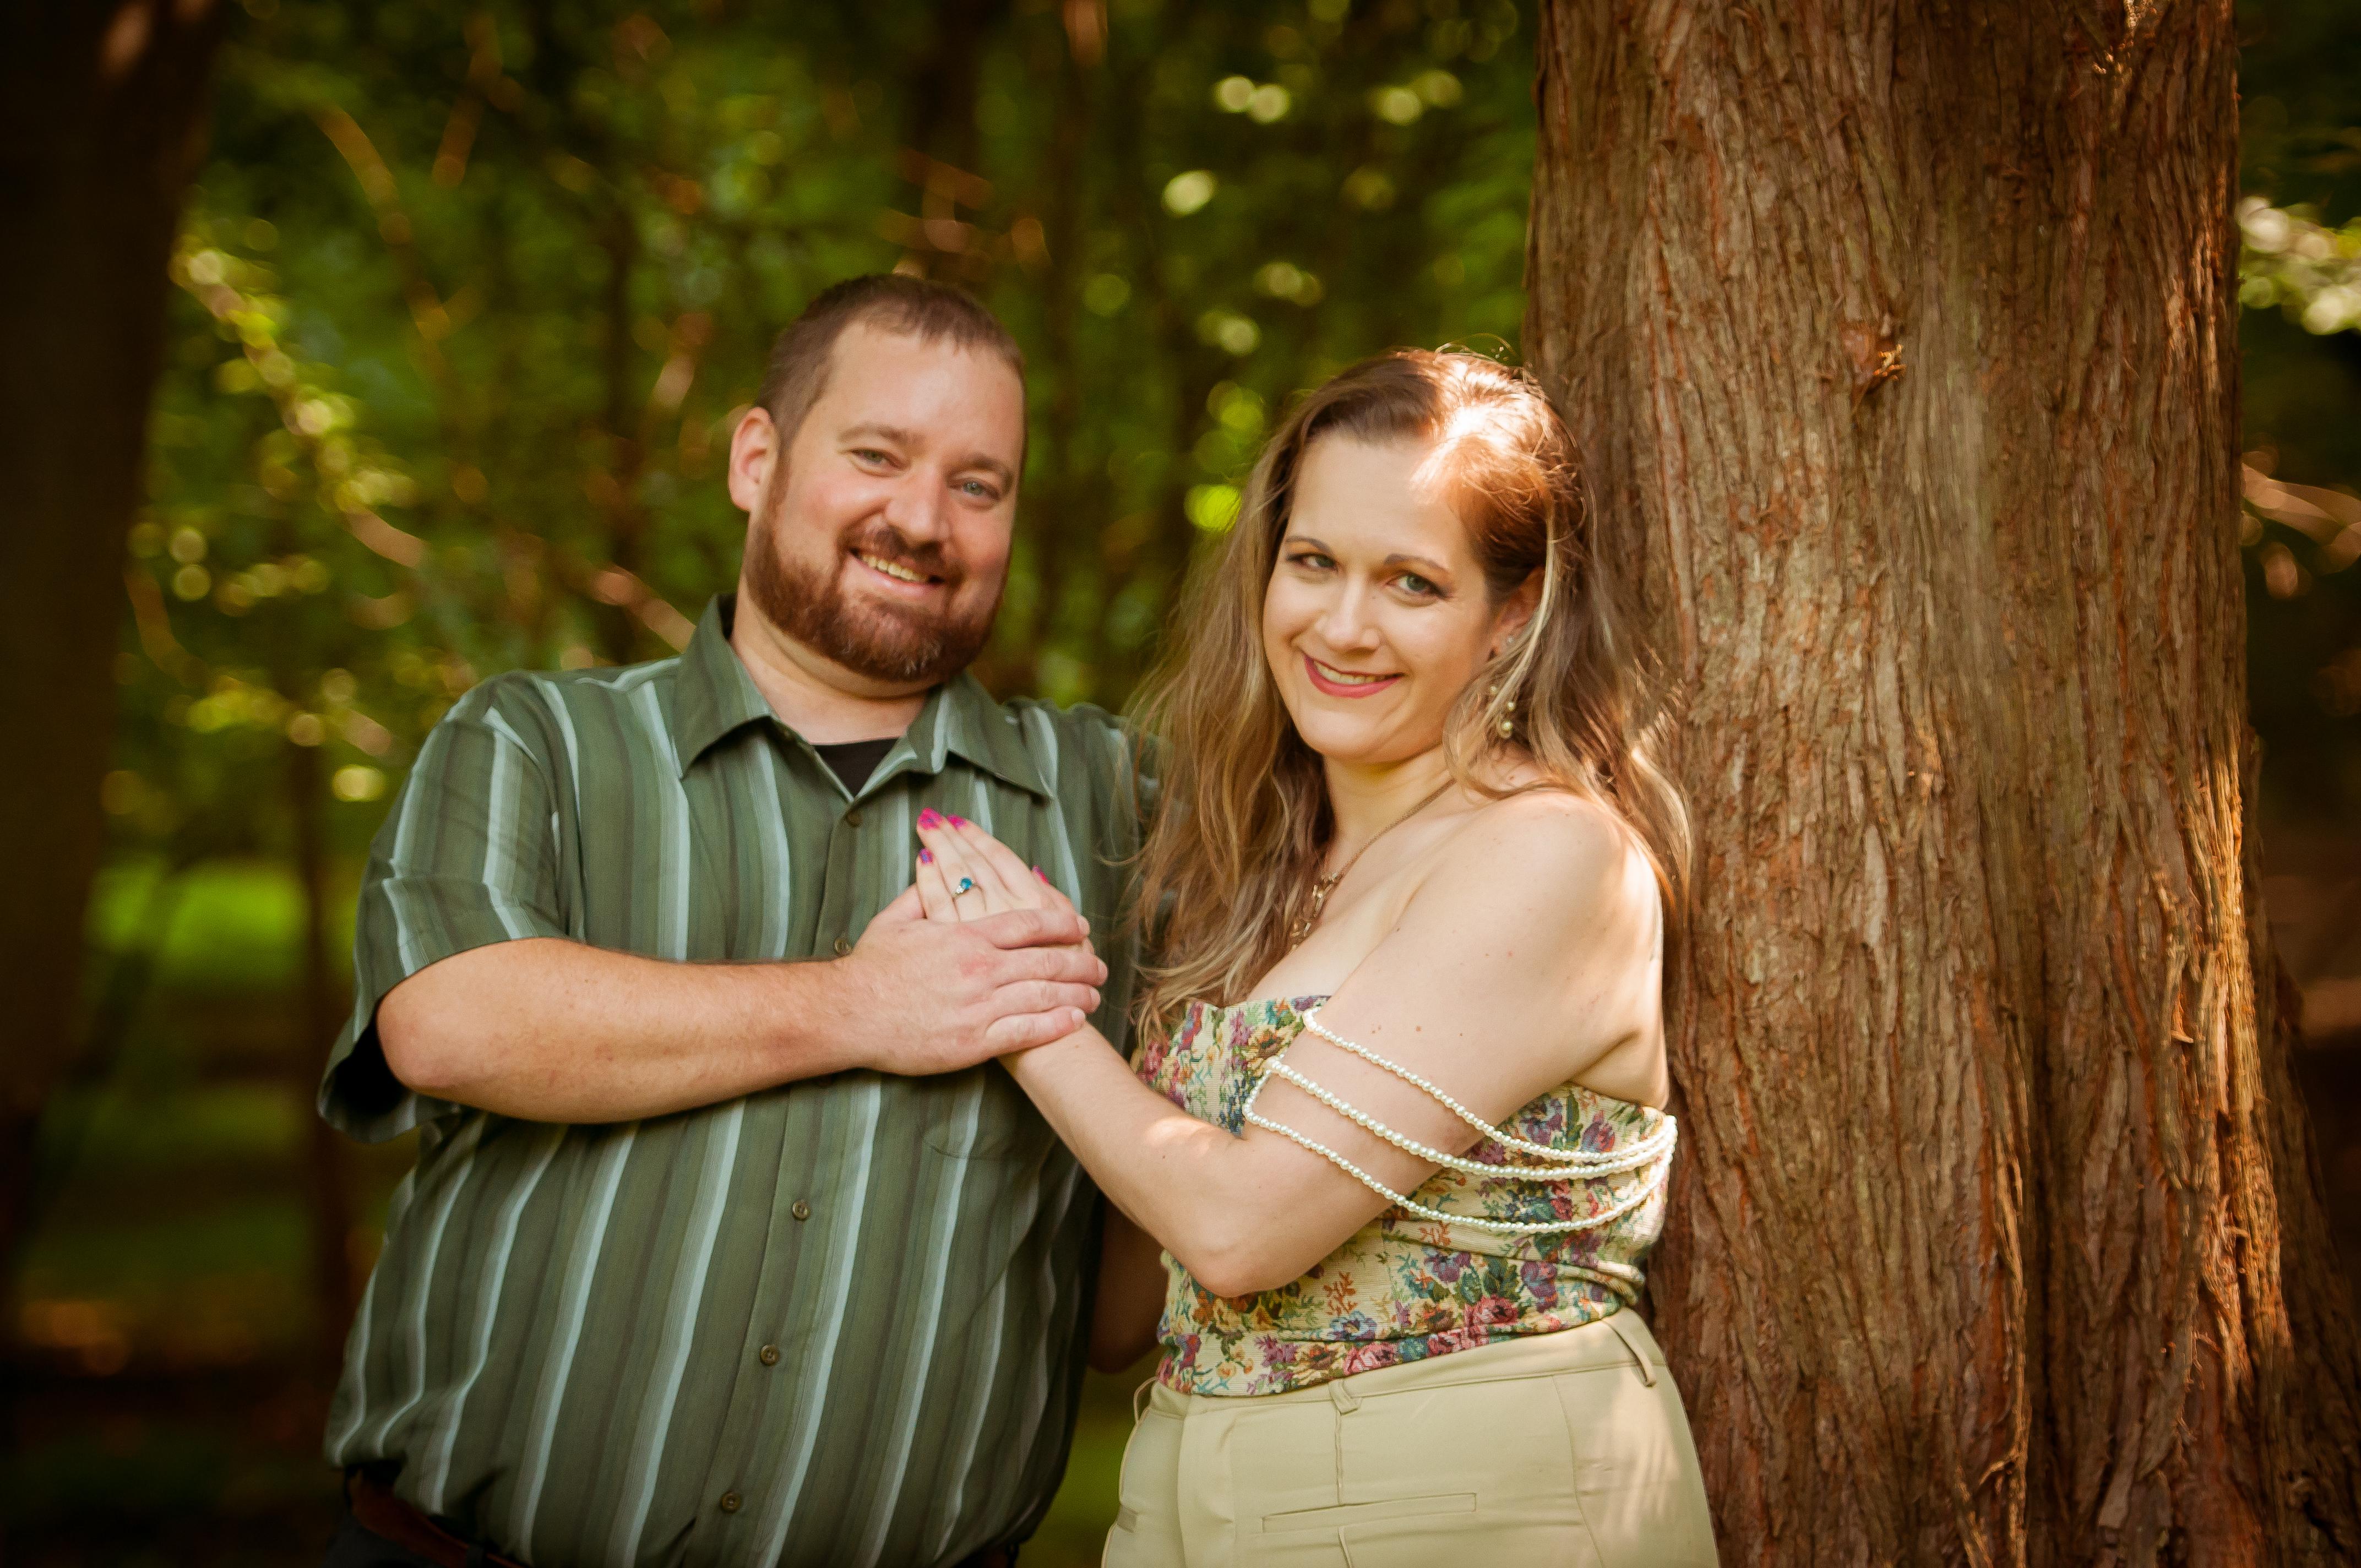 The Wedding Website of Taryn Lyon and Erik Slack